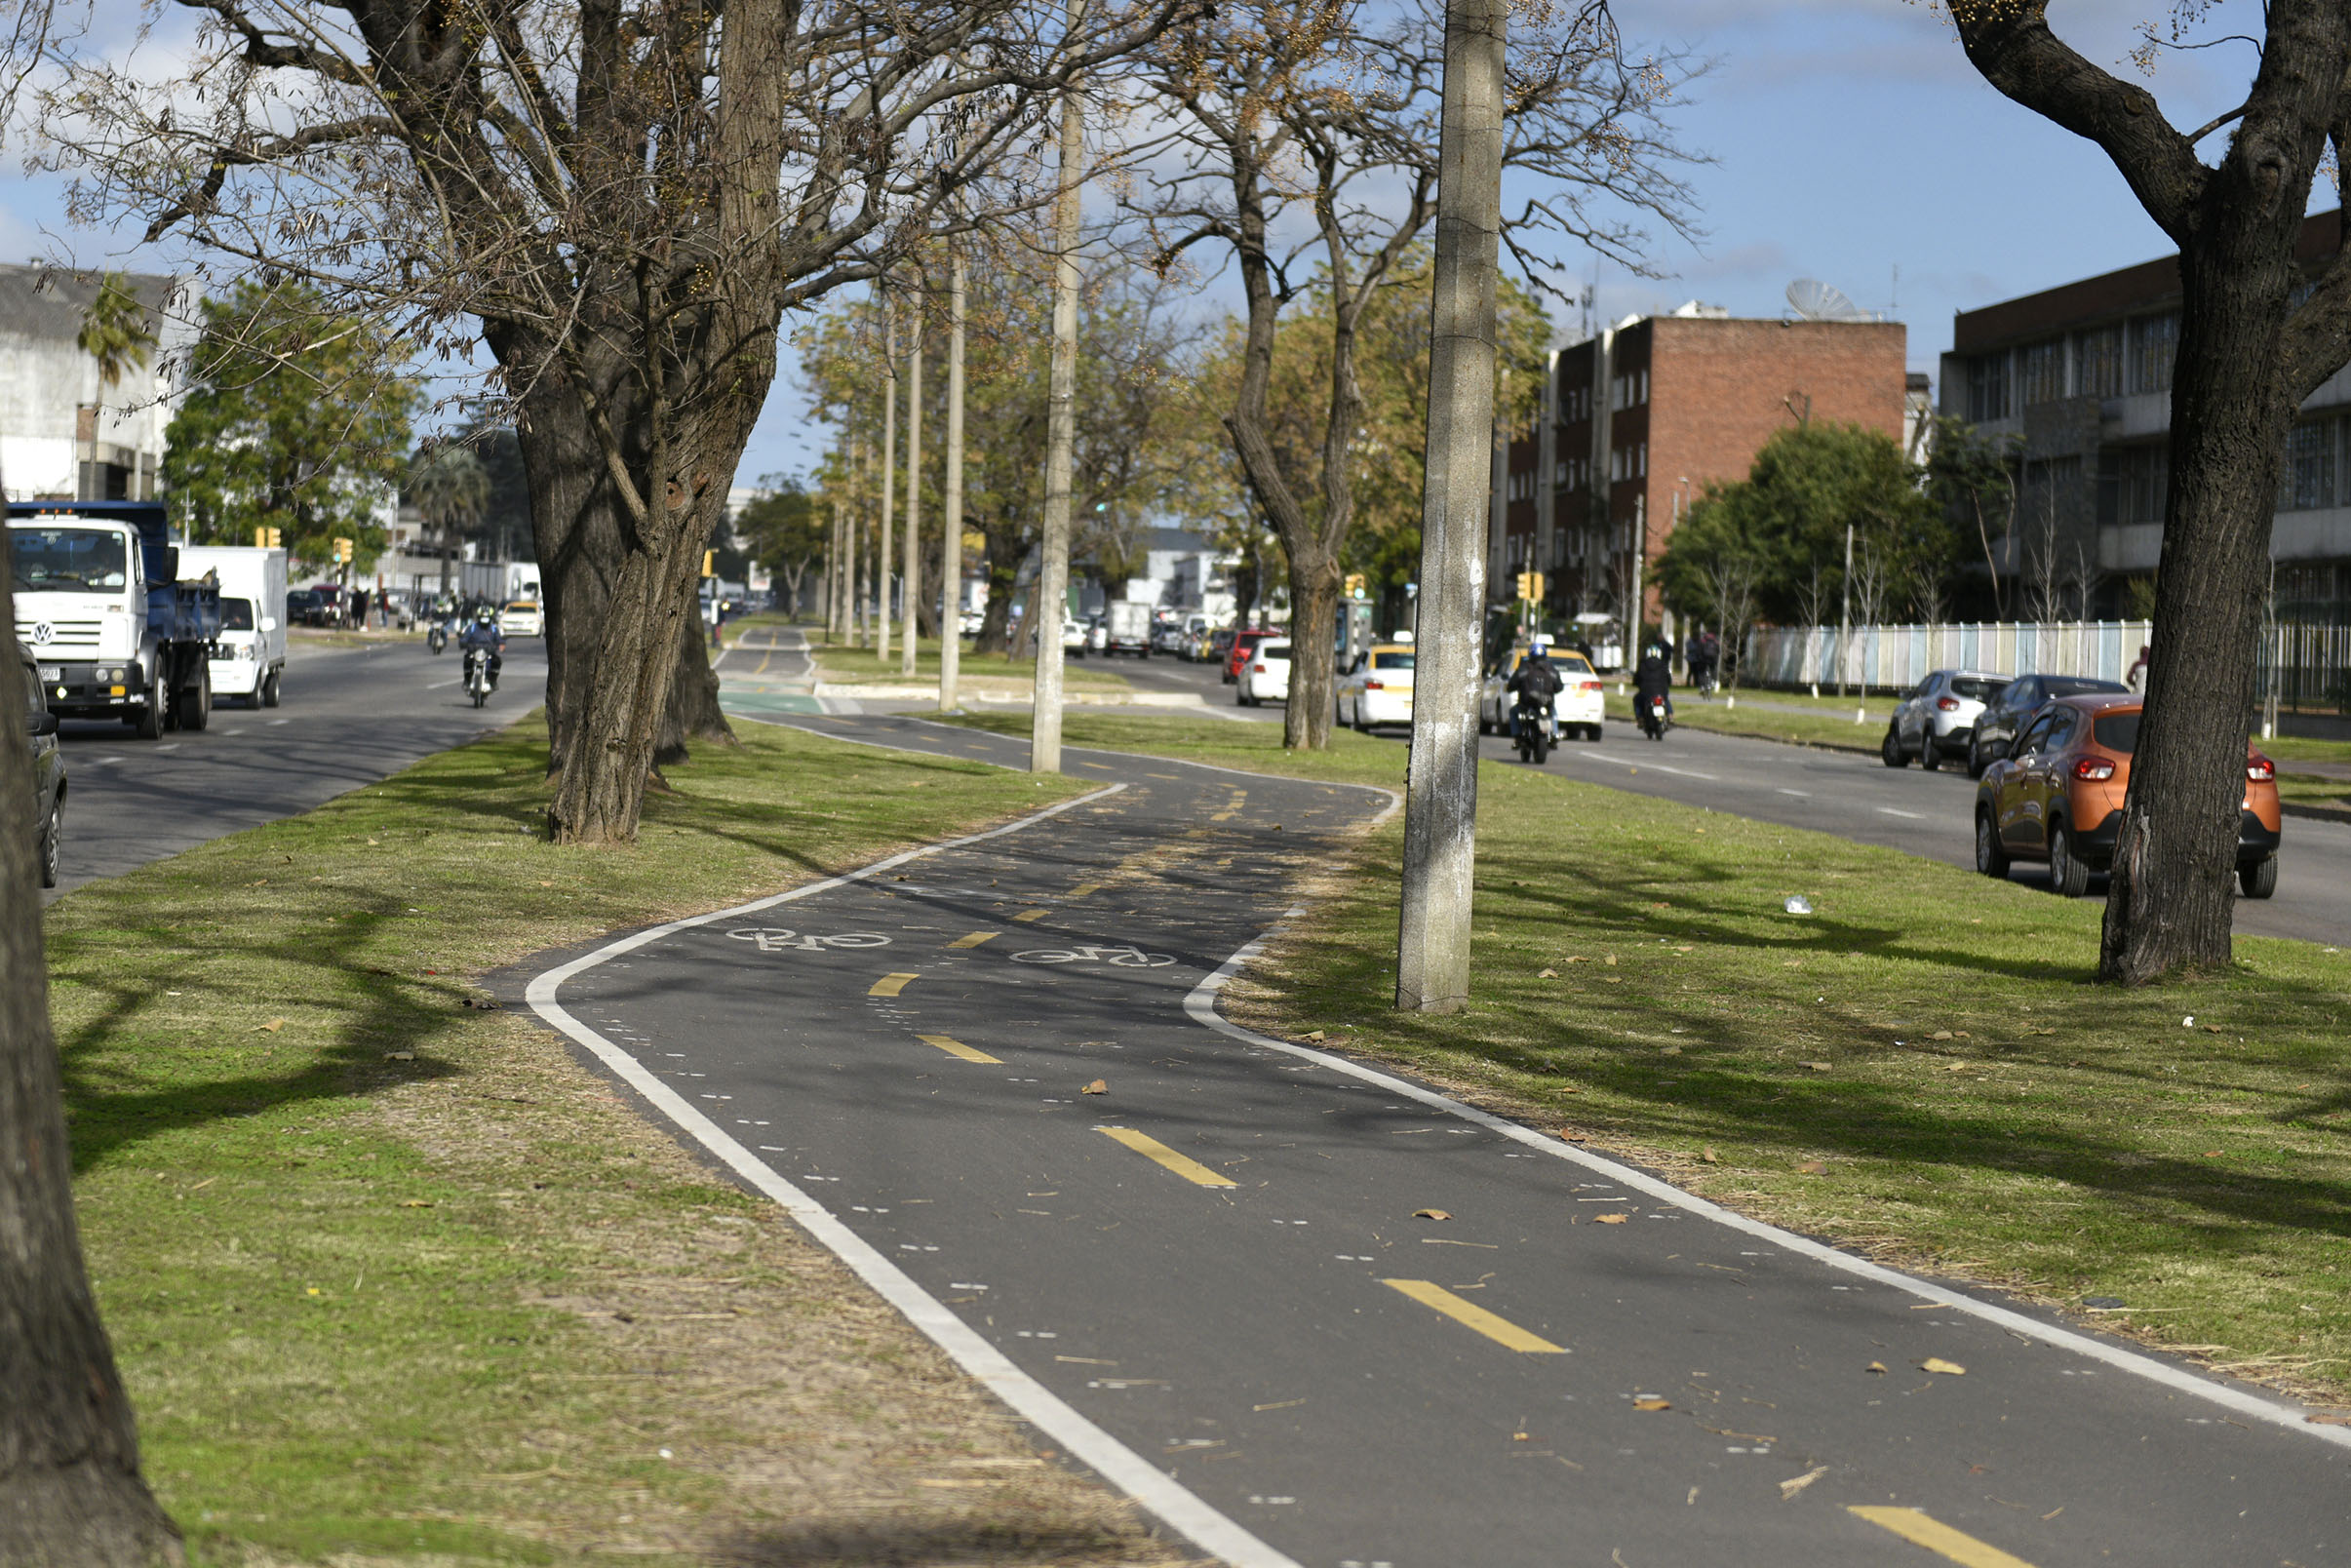 Bicicircuito Montevideo. Bicisenda Larrañaga